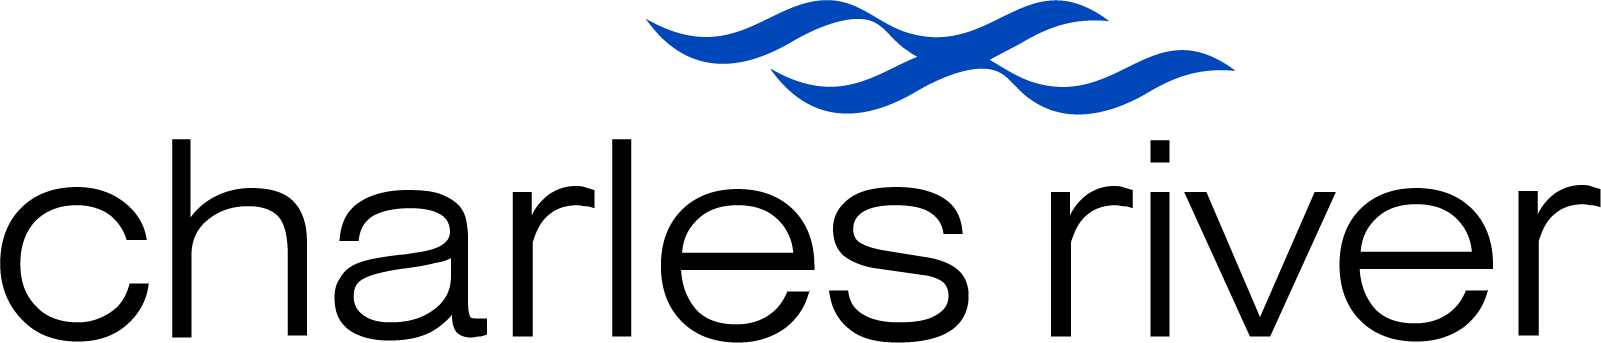 Charles River Logo png